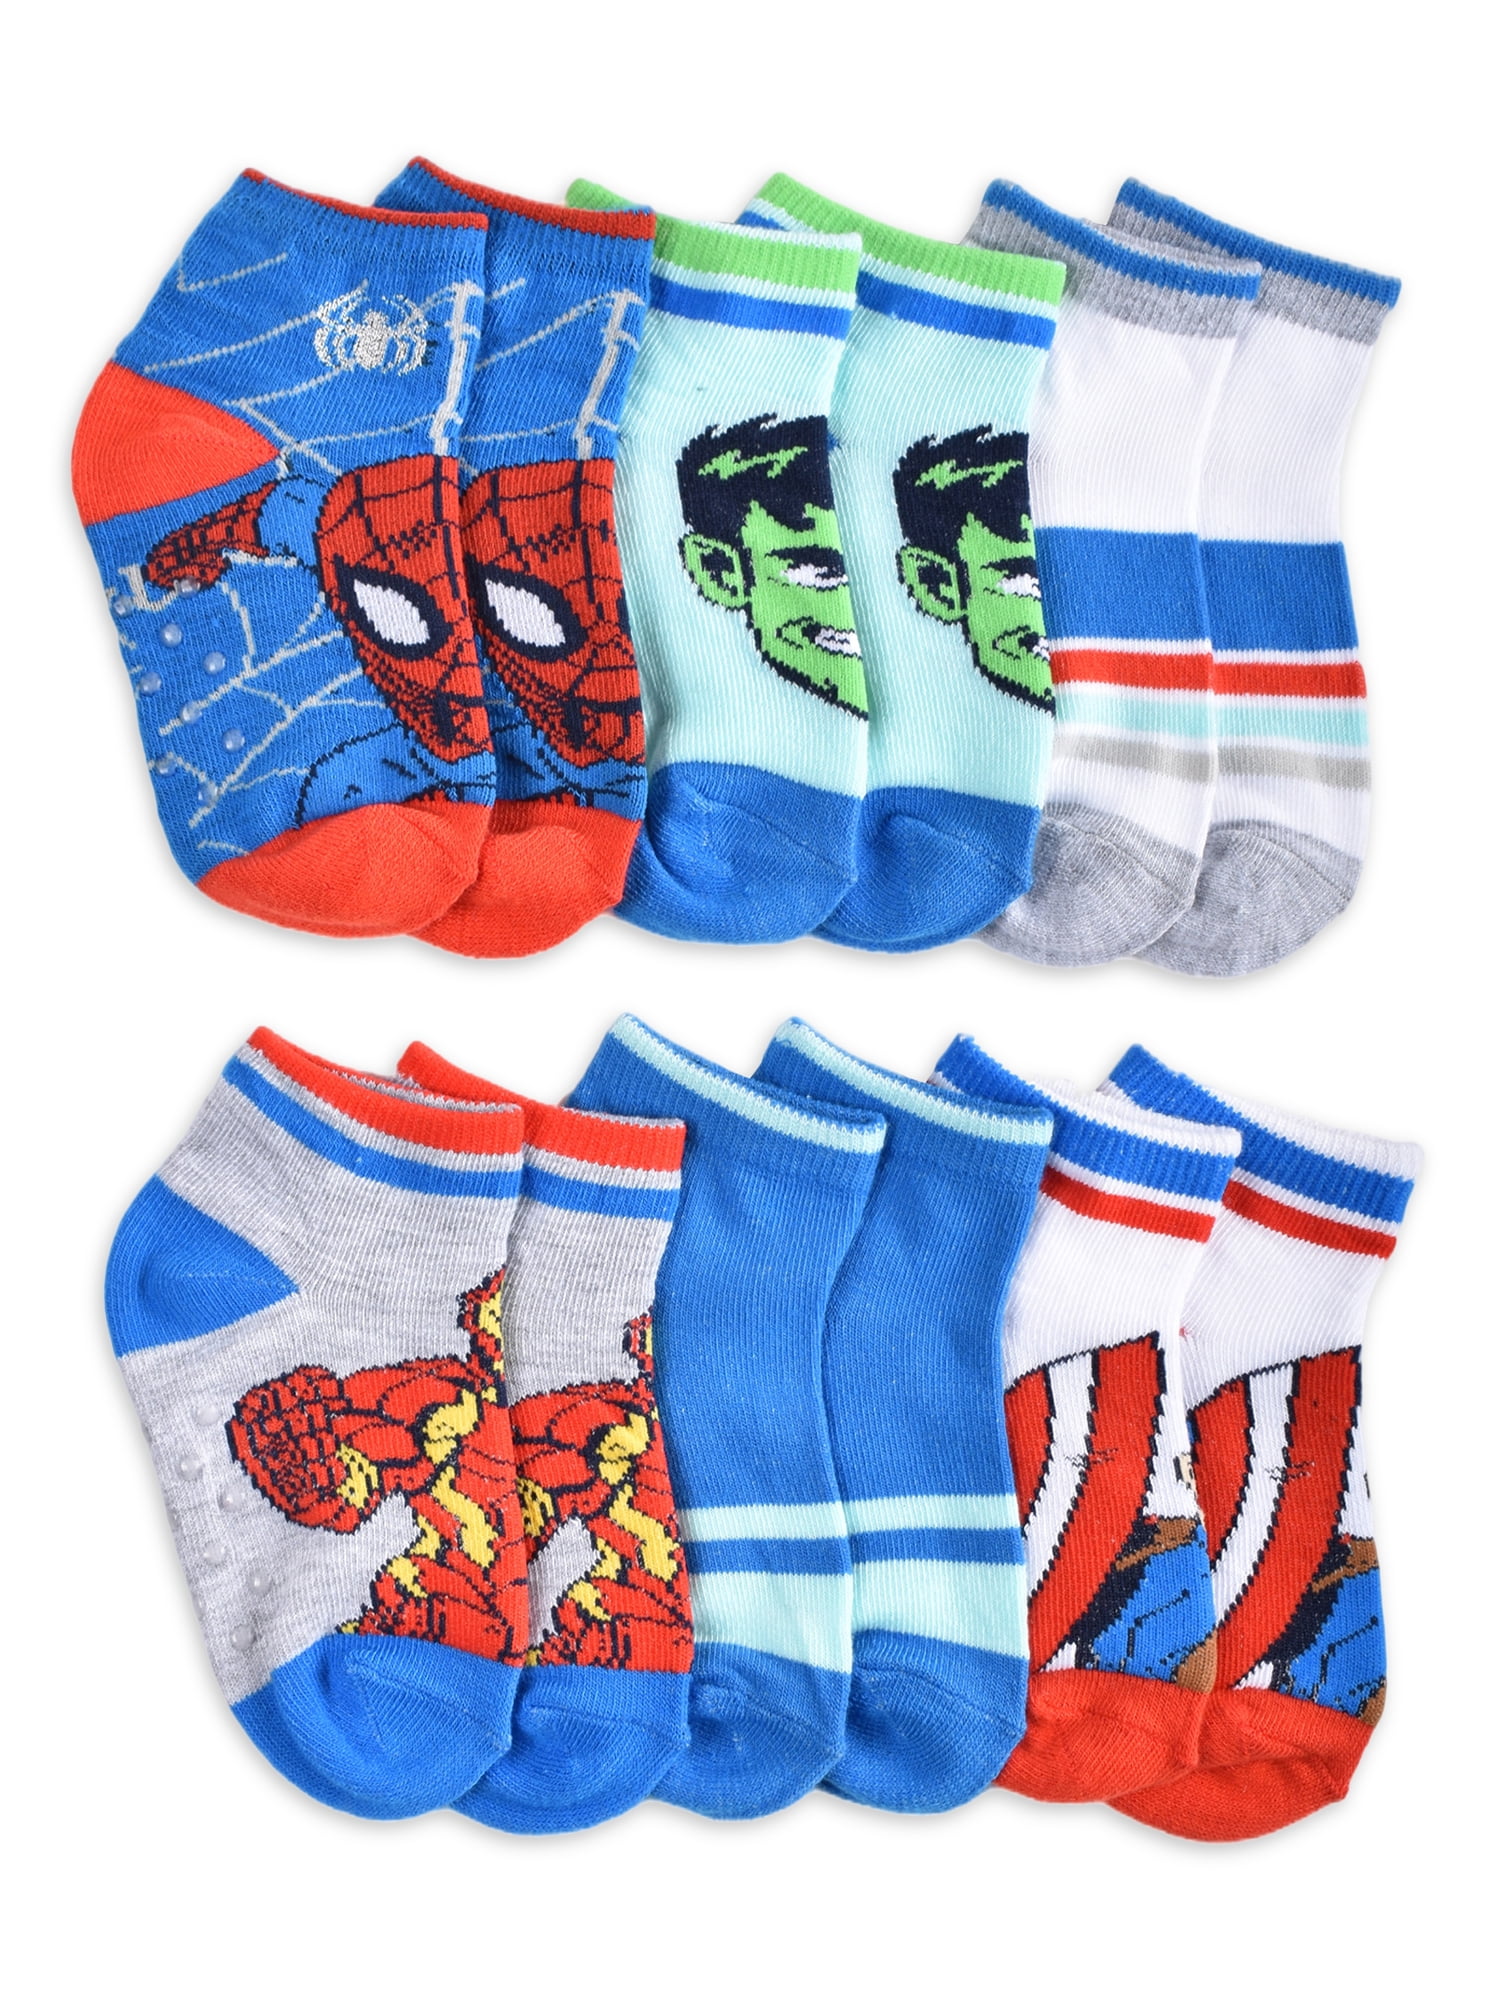 SOCKSHOP Mens and Ladies Marvel Spider-Man Cotton Socks Pack of 3